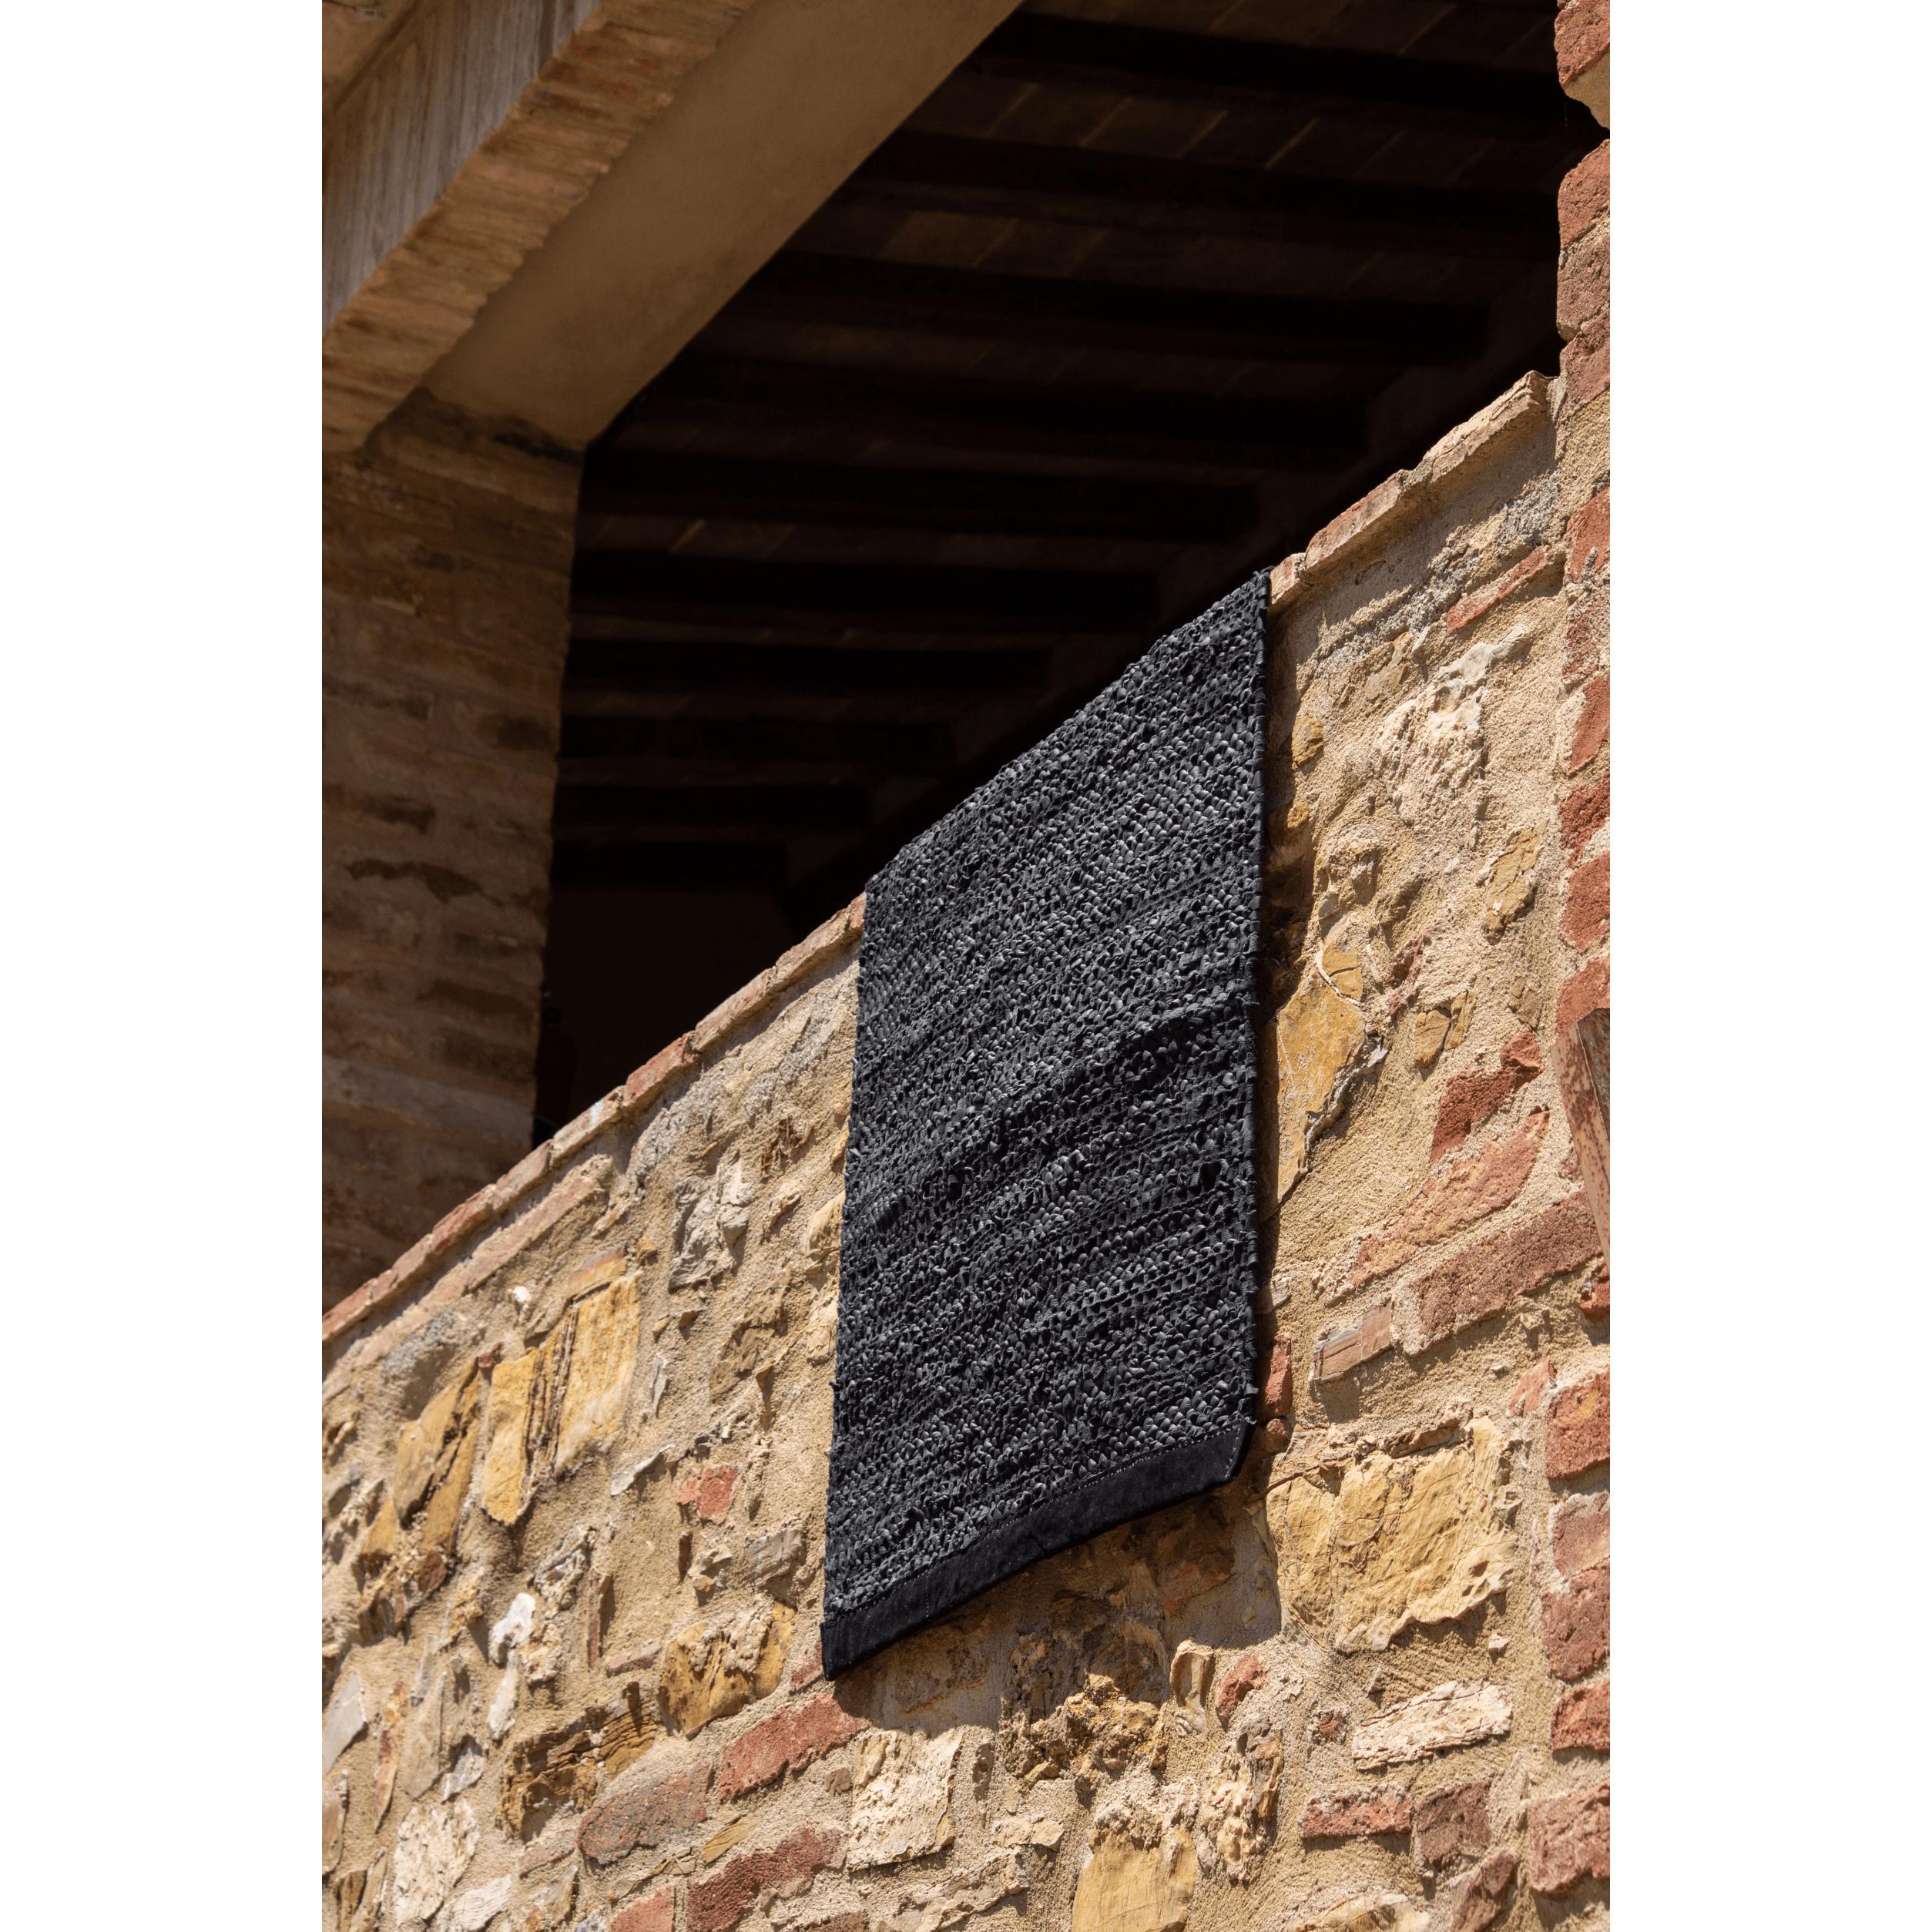 Tappeto in pelle solida nera, 170 x 240 cm